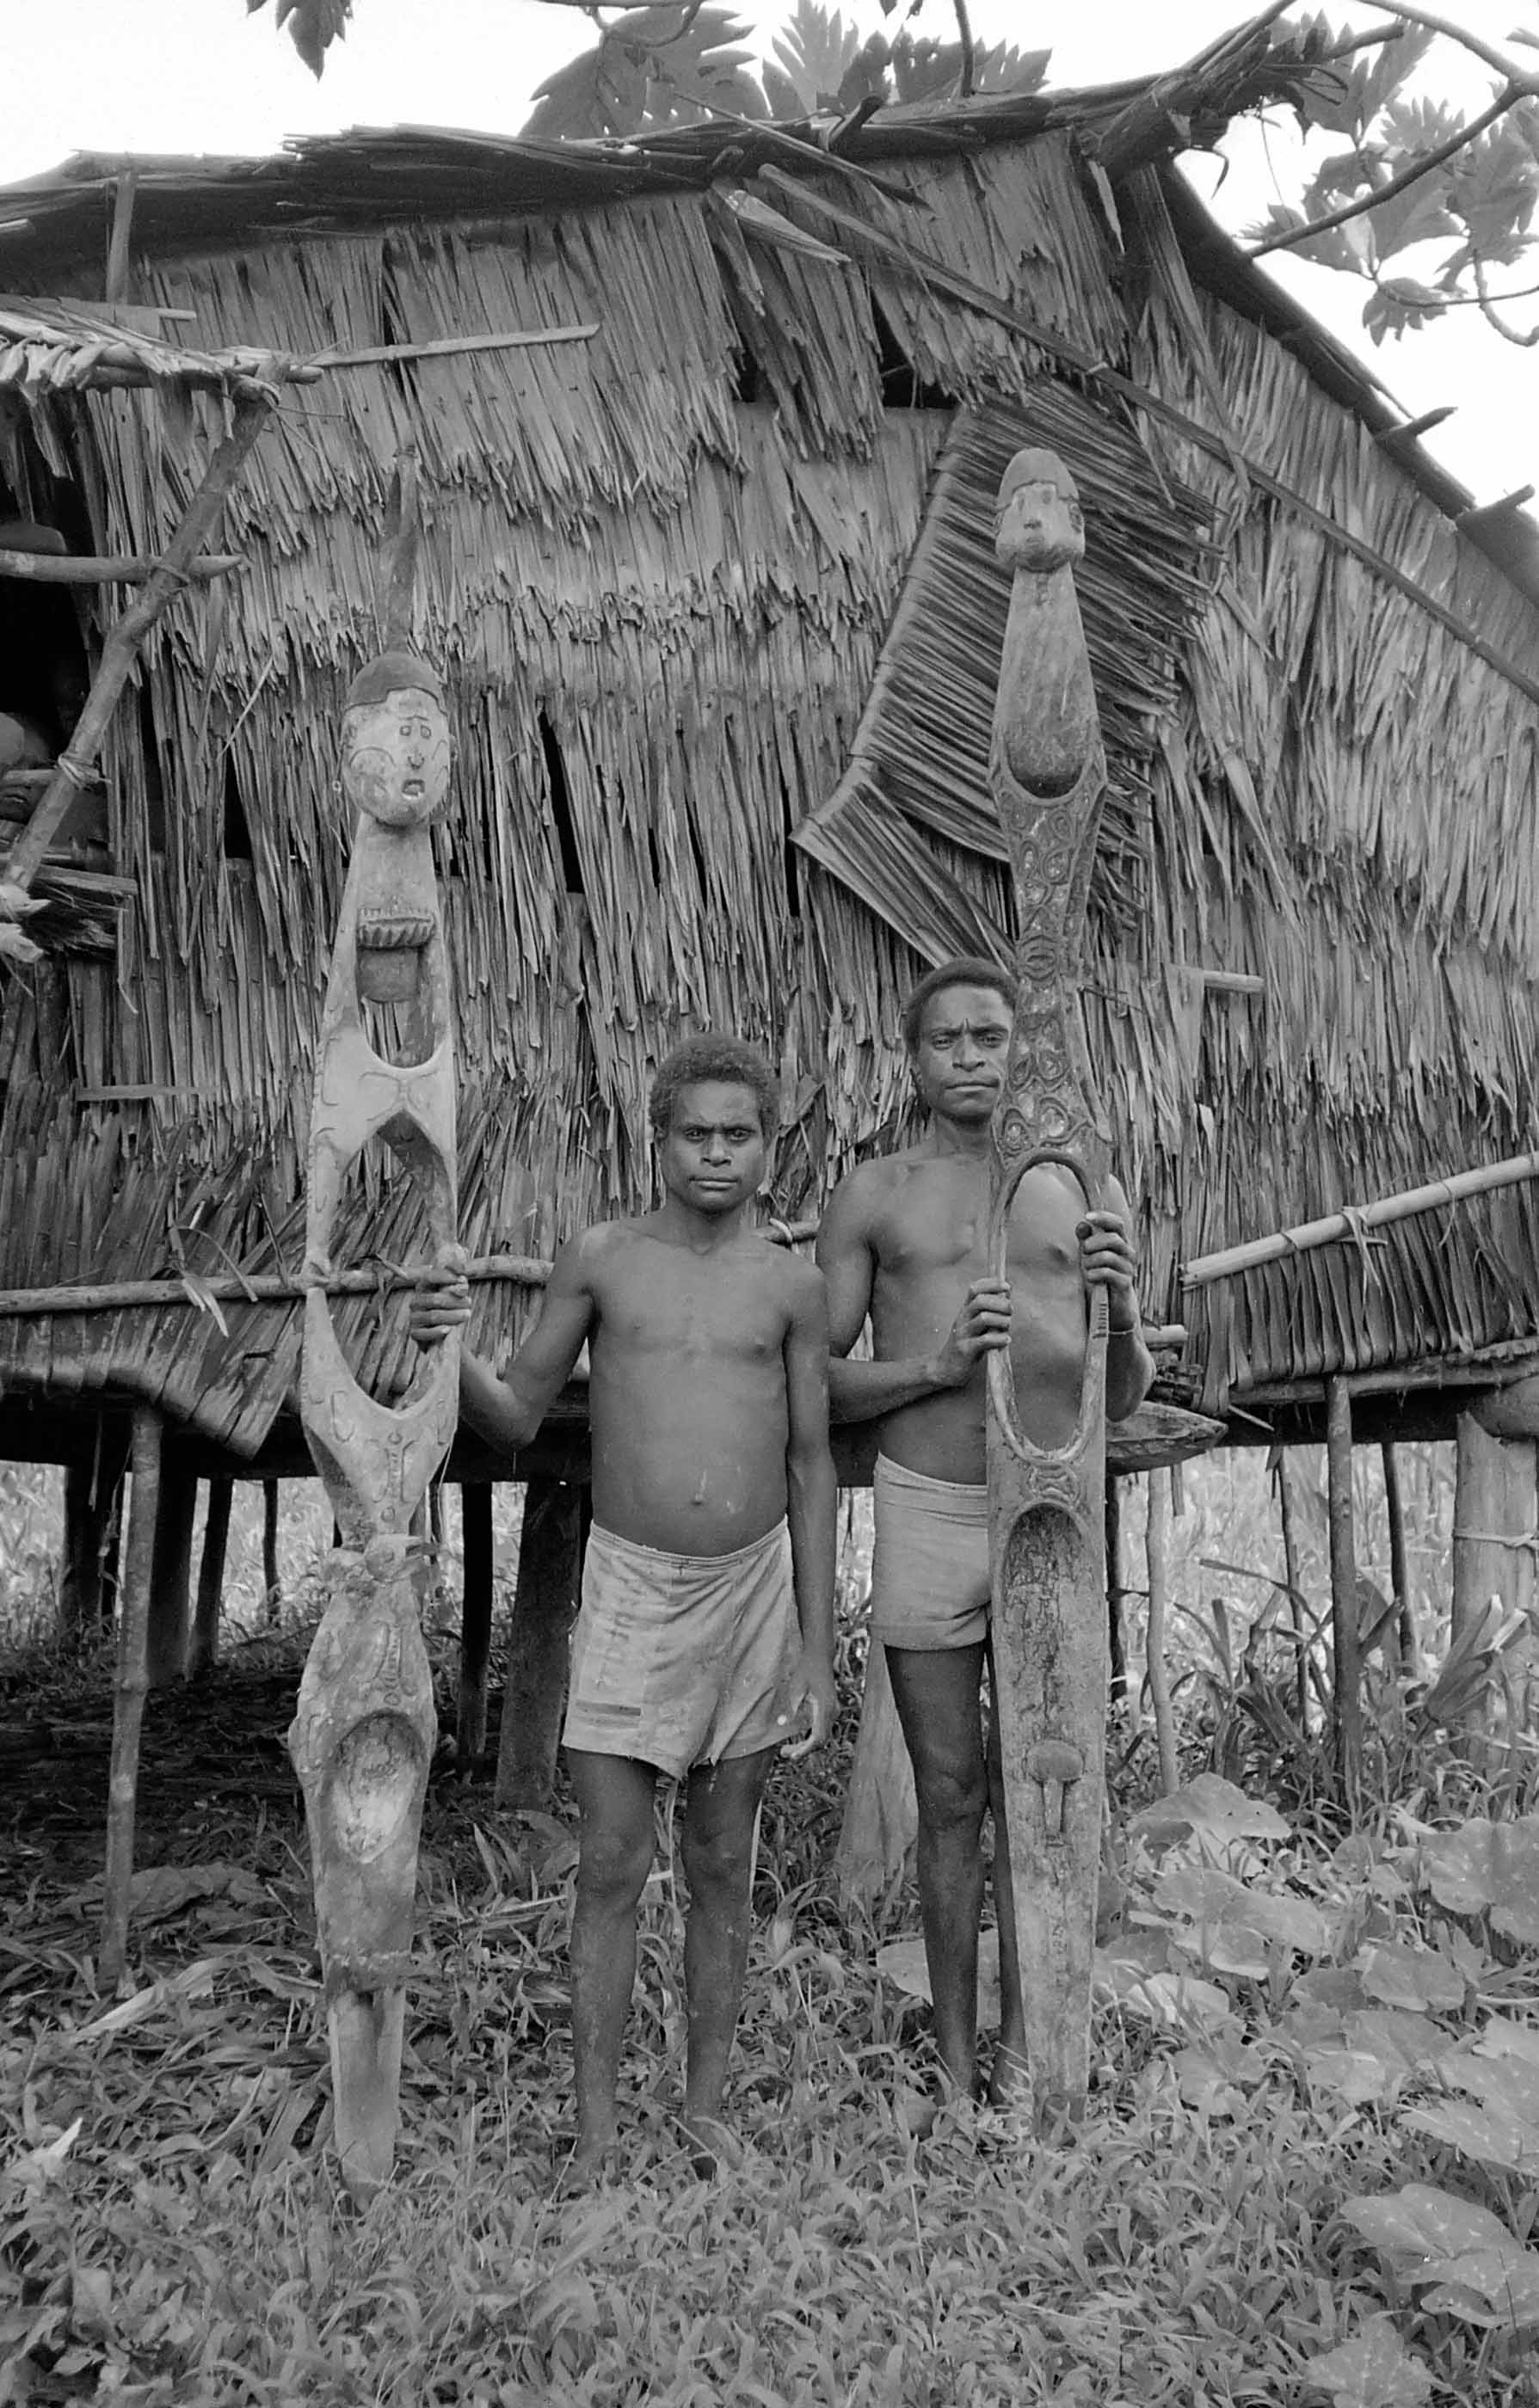 A Fine Rare New Guinea Ceremonial Figure Asmat People West Papua Irian Jaya Indonesia